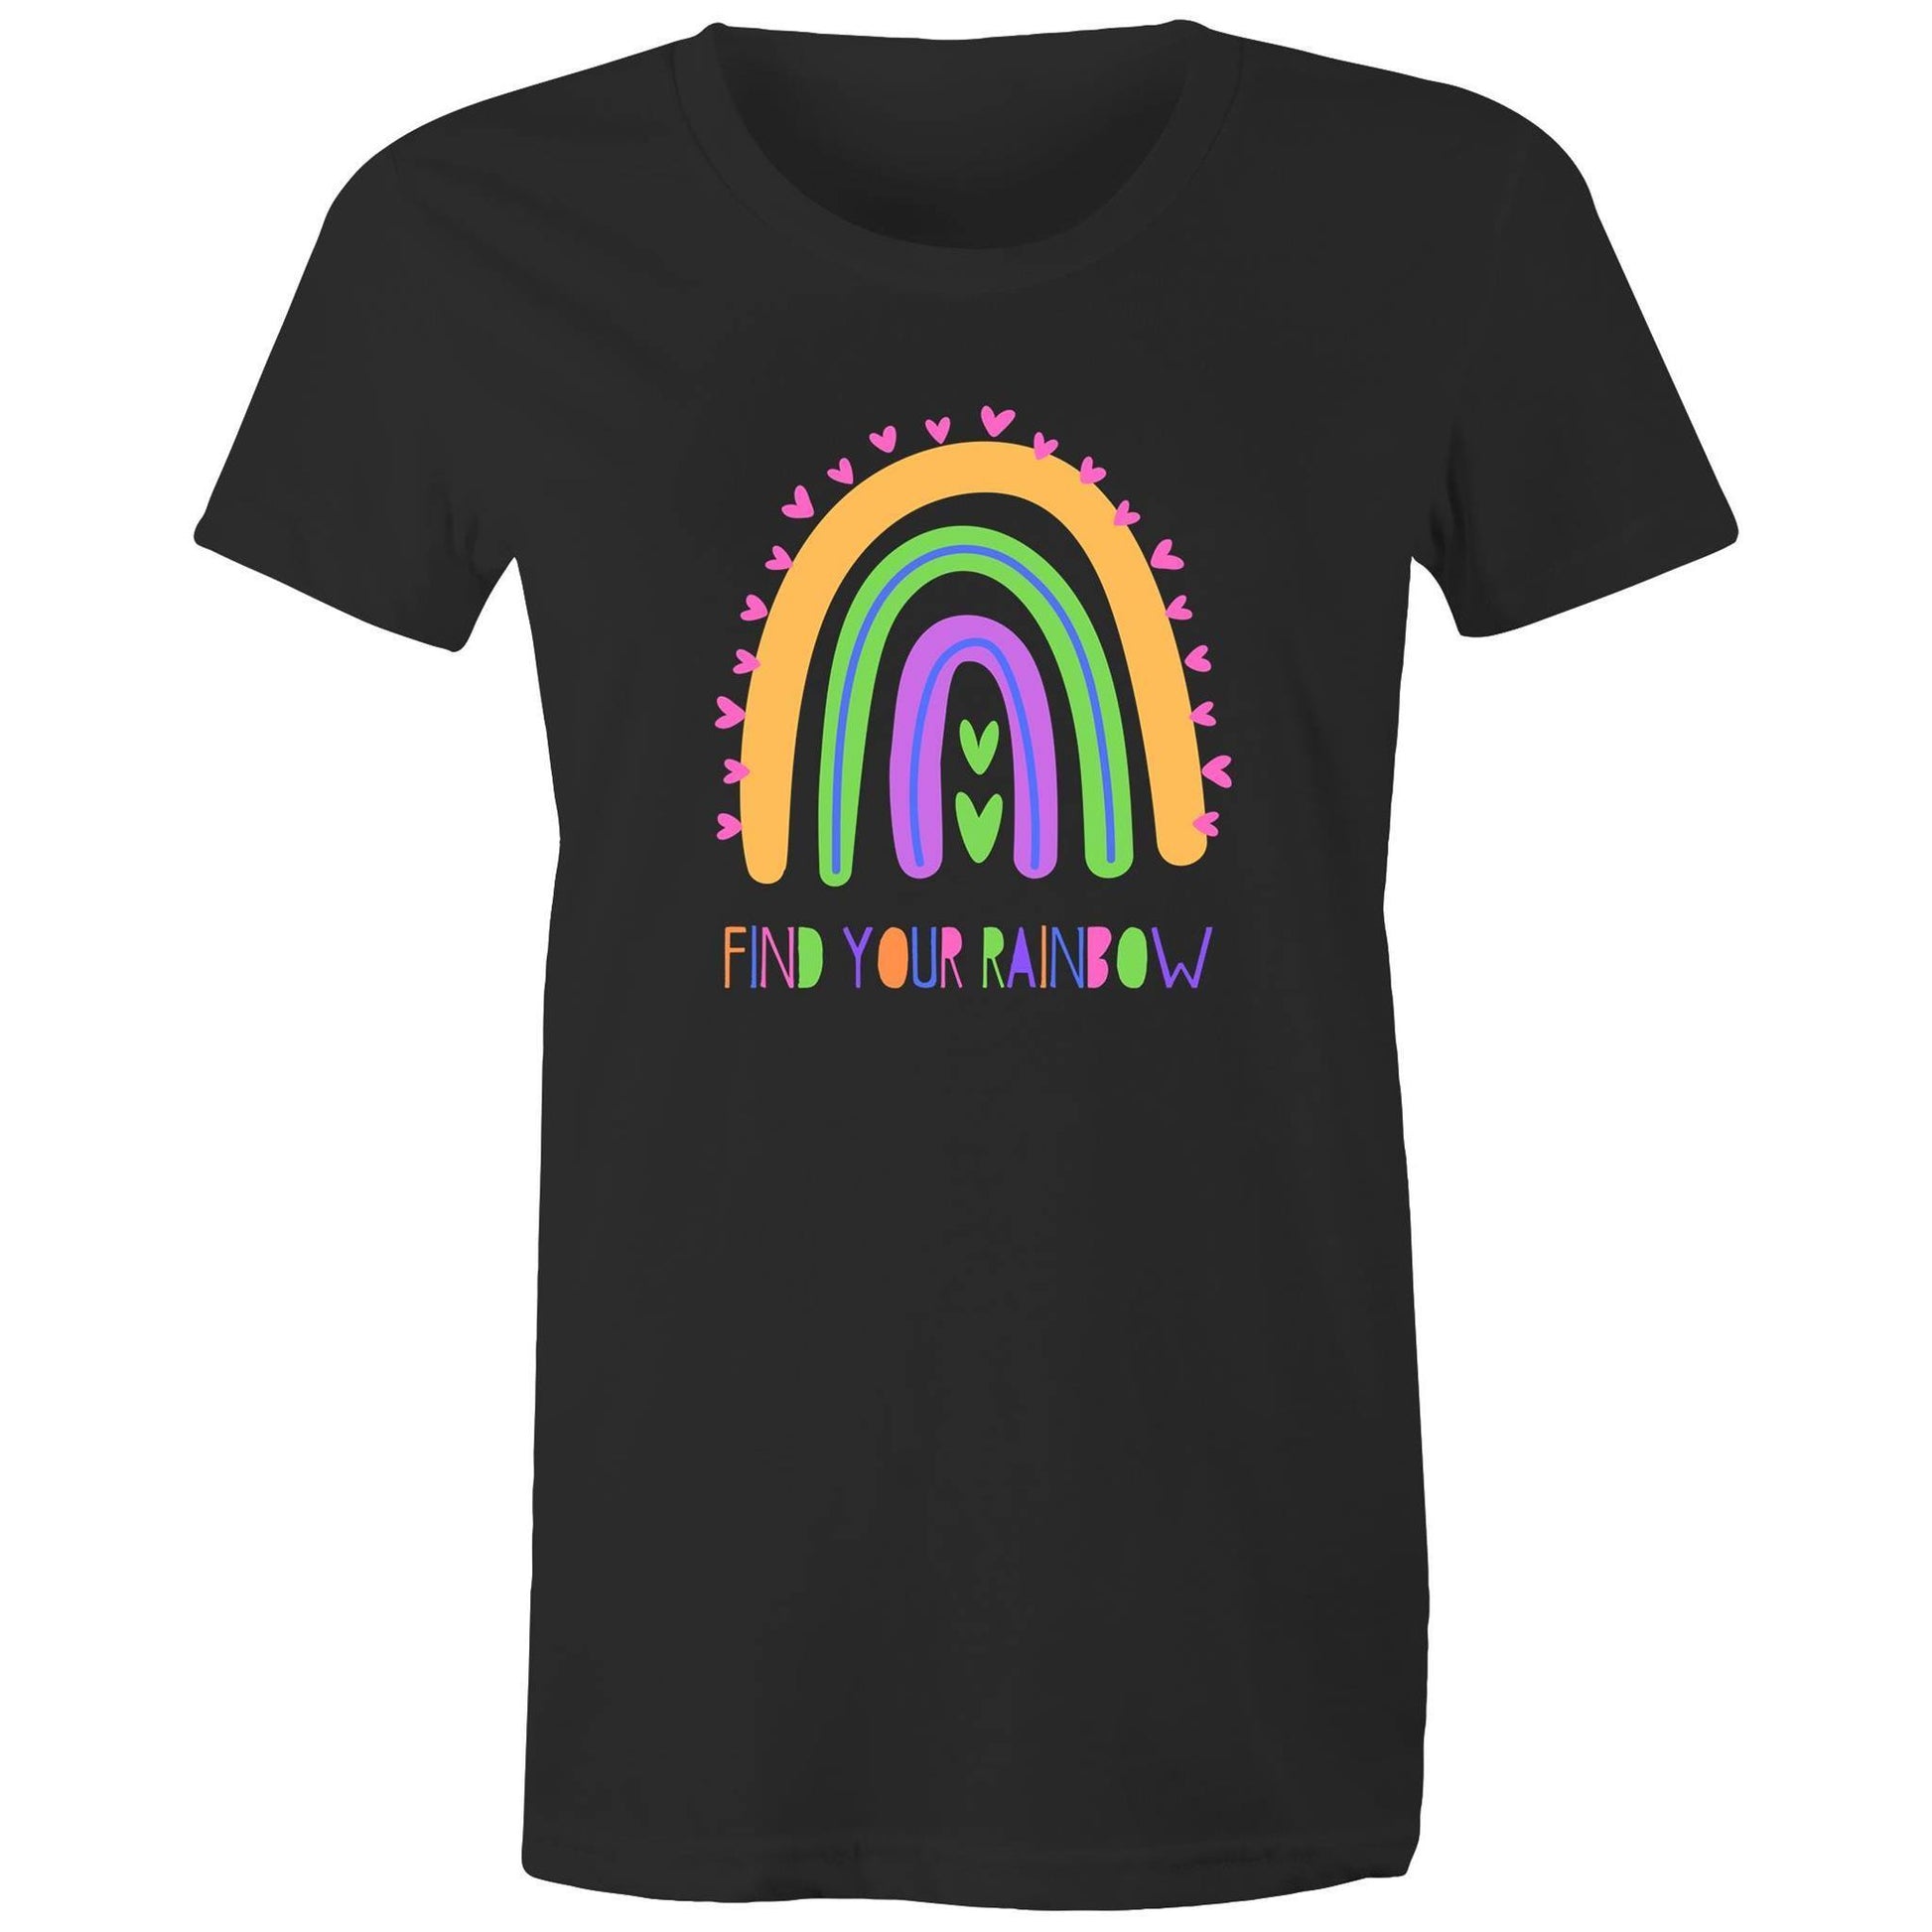 Find Your Rainbow - Women's Maple Tee Black Womens T-shirt Womens